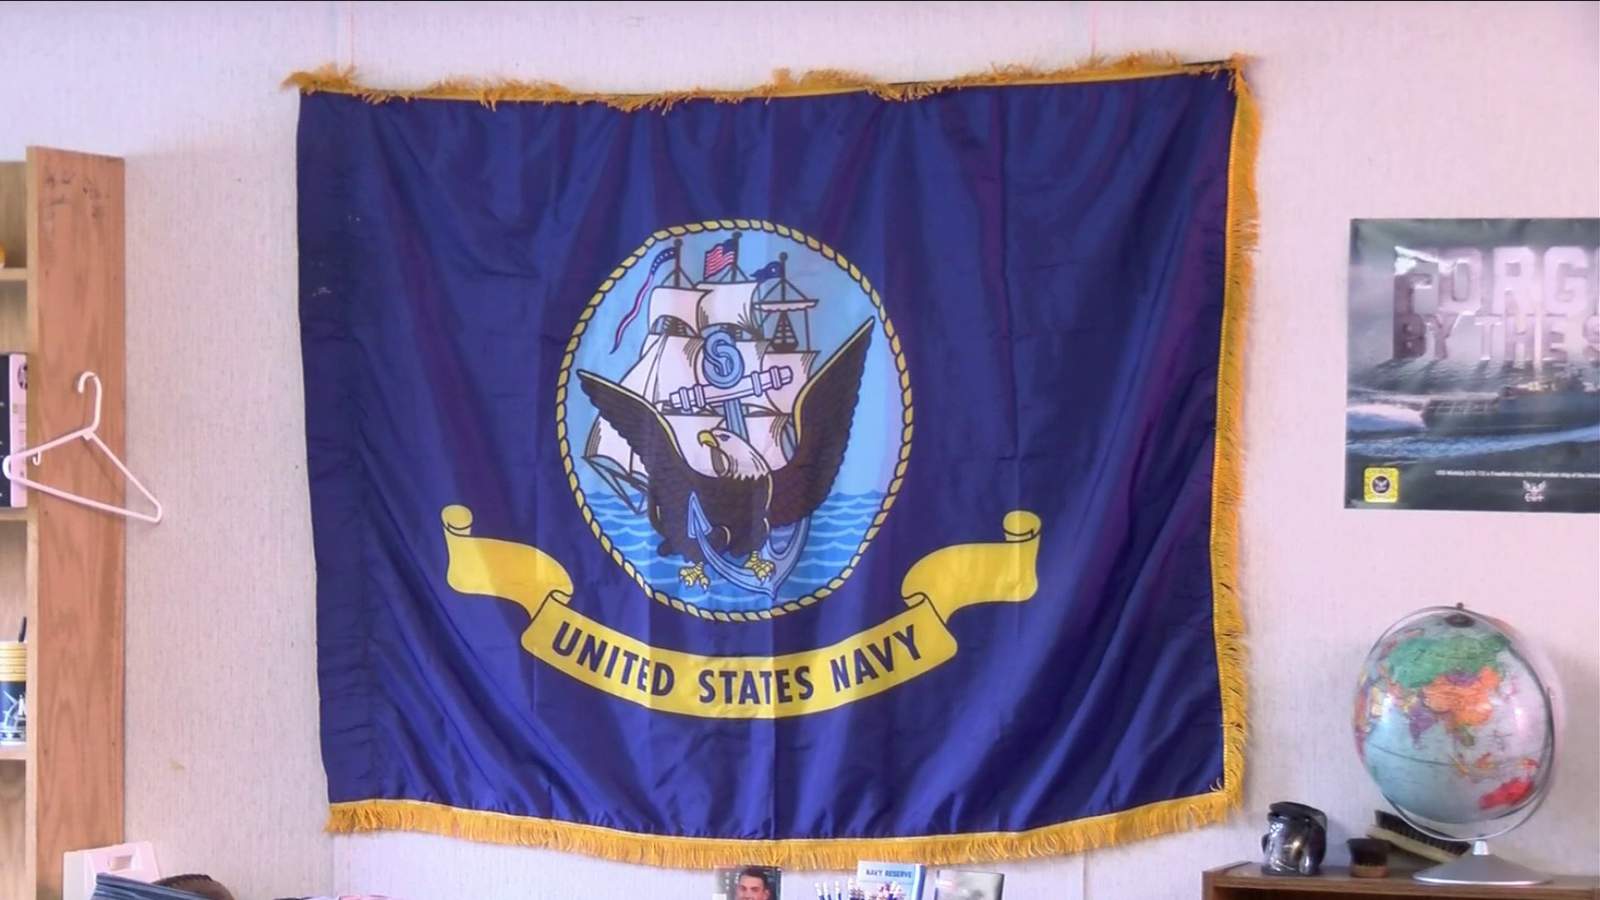 Grayson County High School Navy ROTC program proving popular